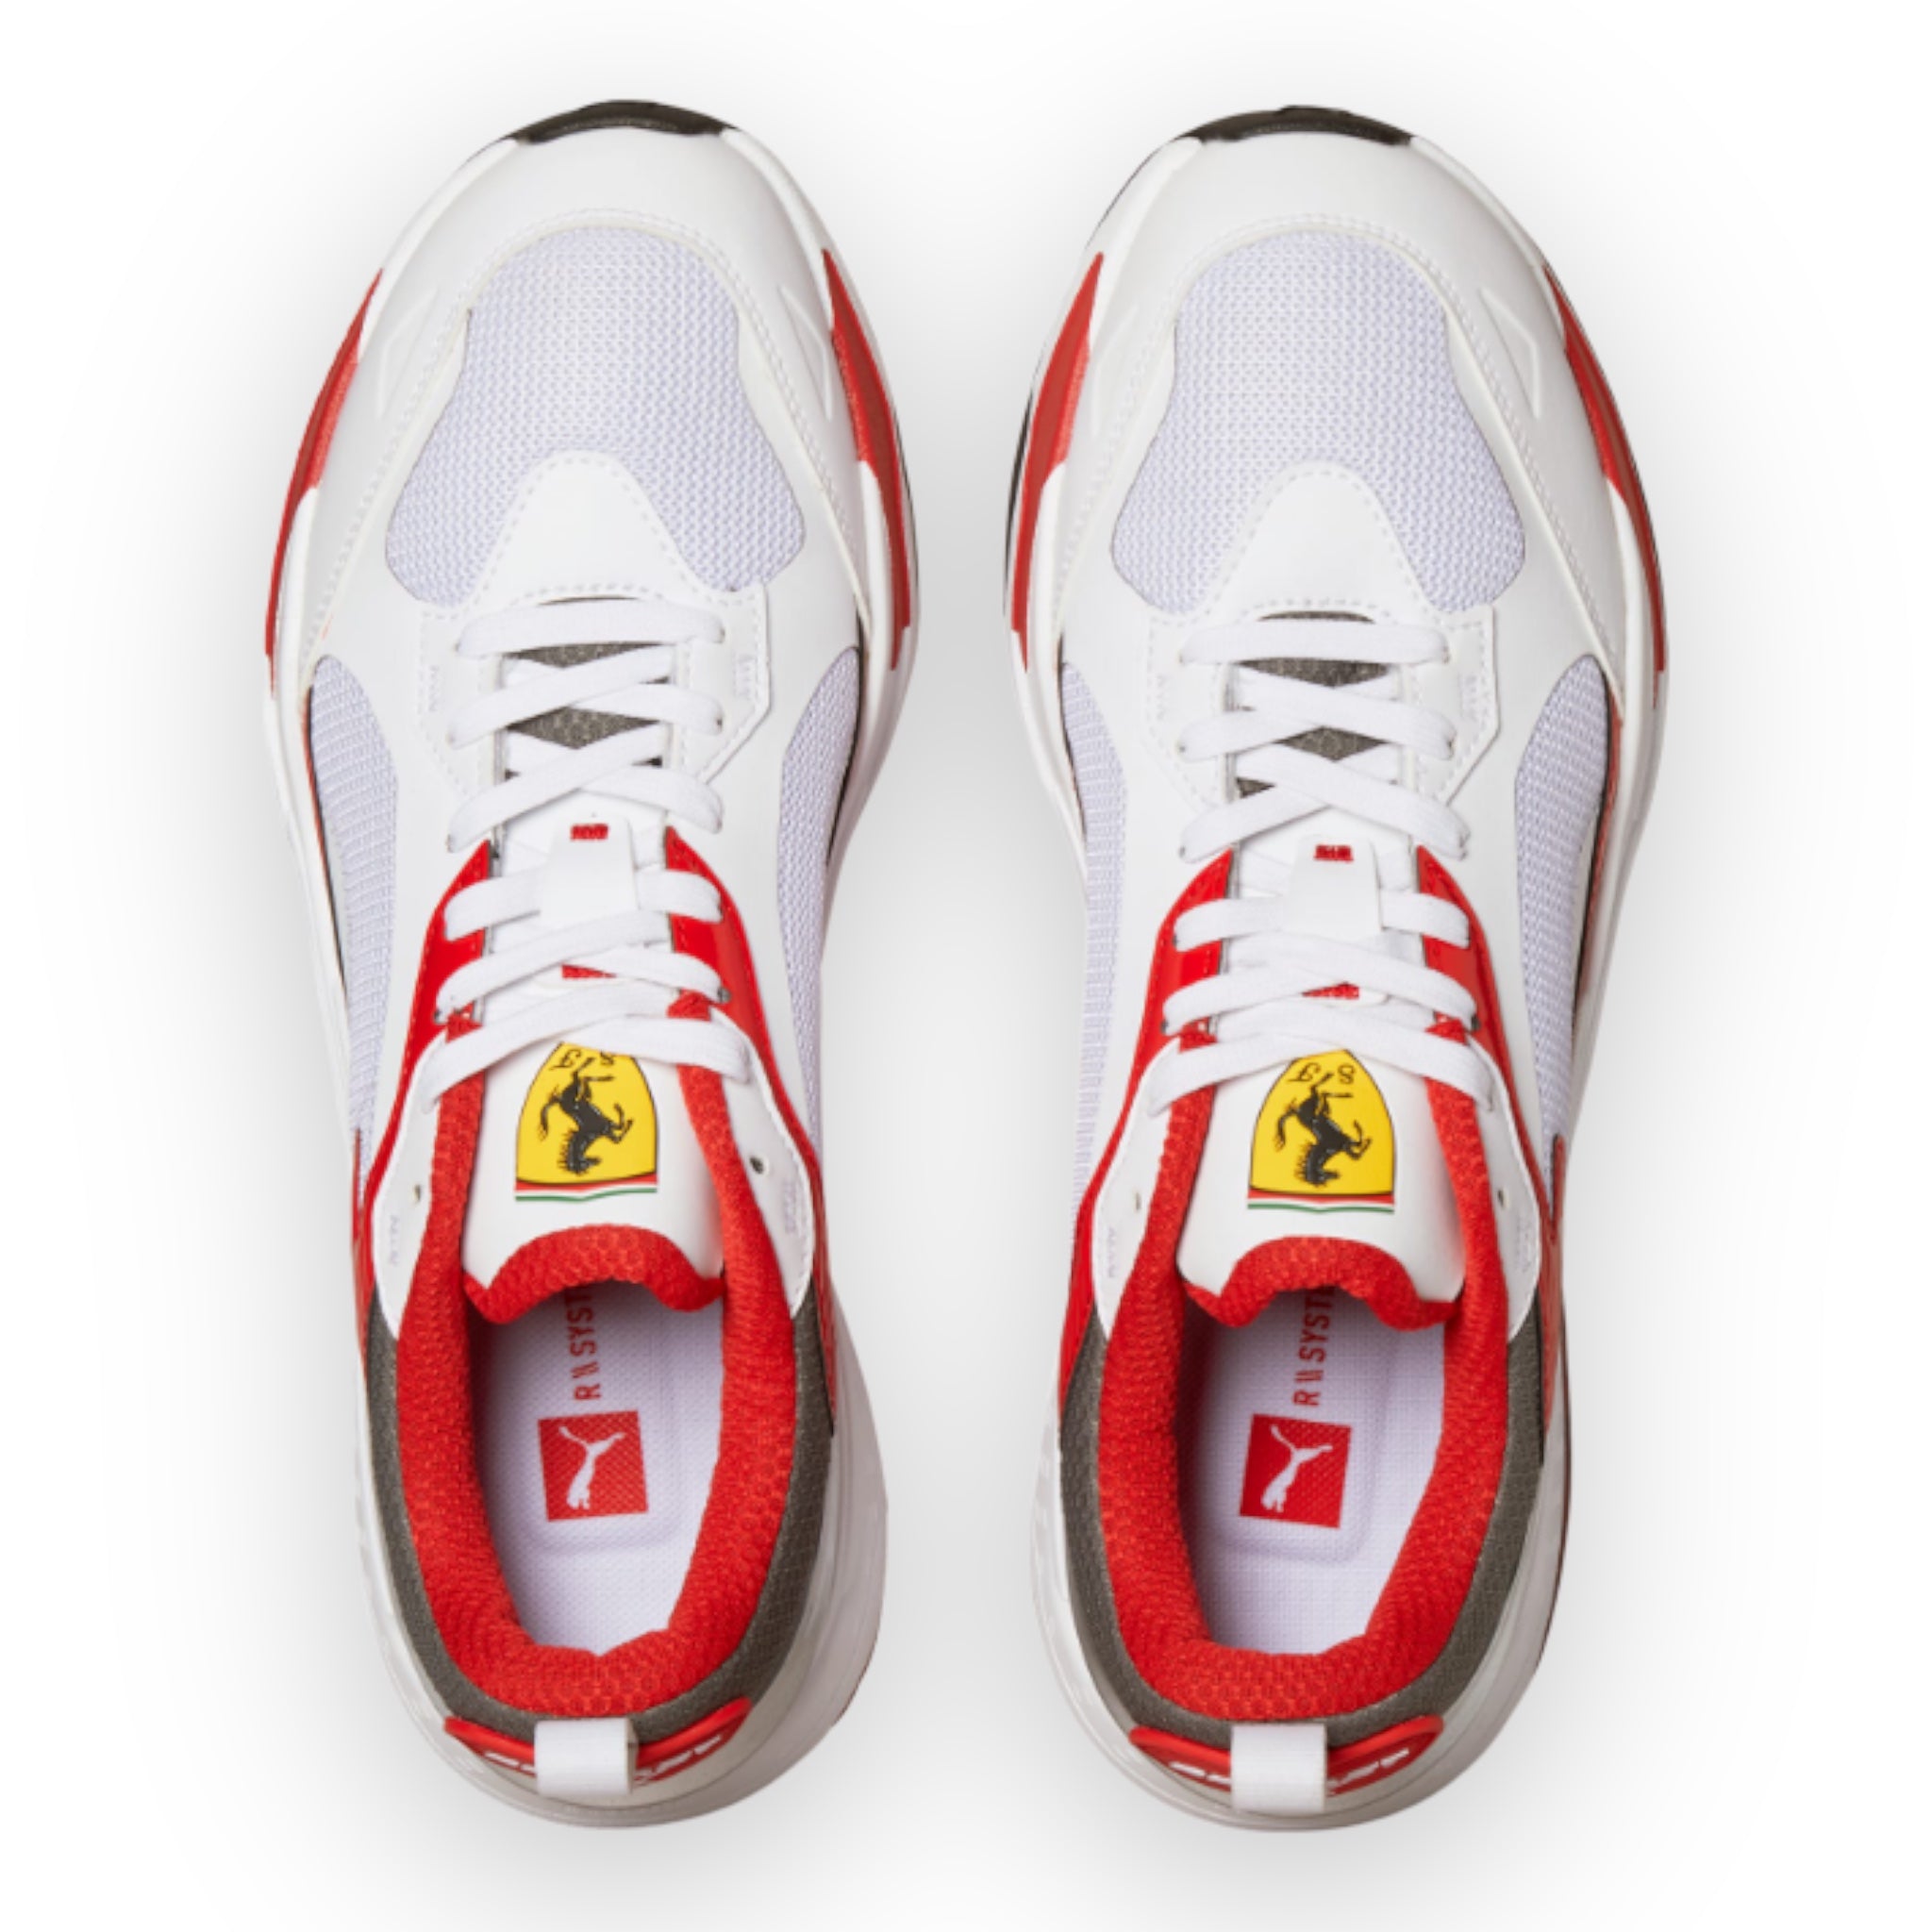 Ferrari PUMA Shoes | Ferrari Store